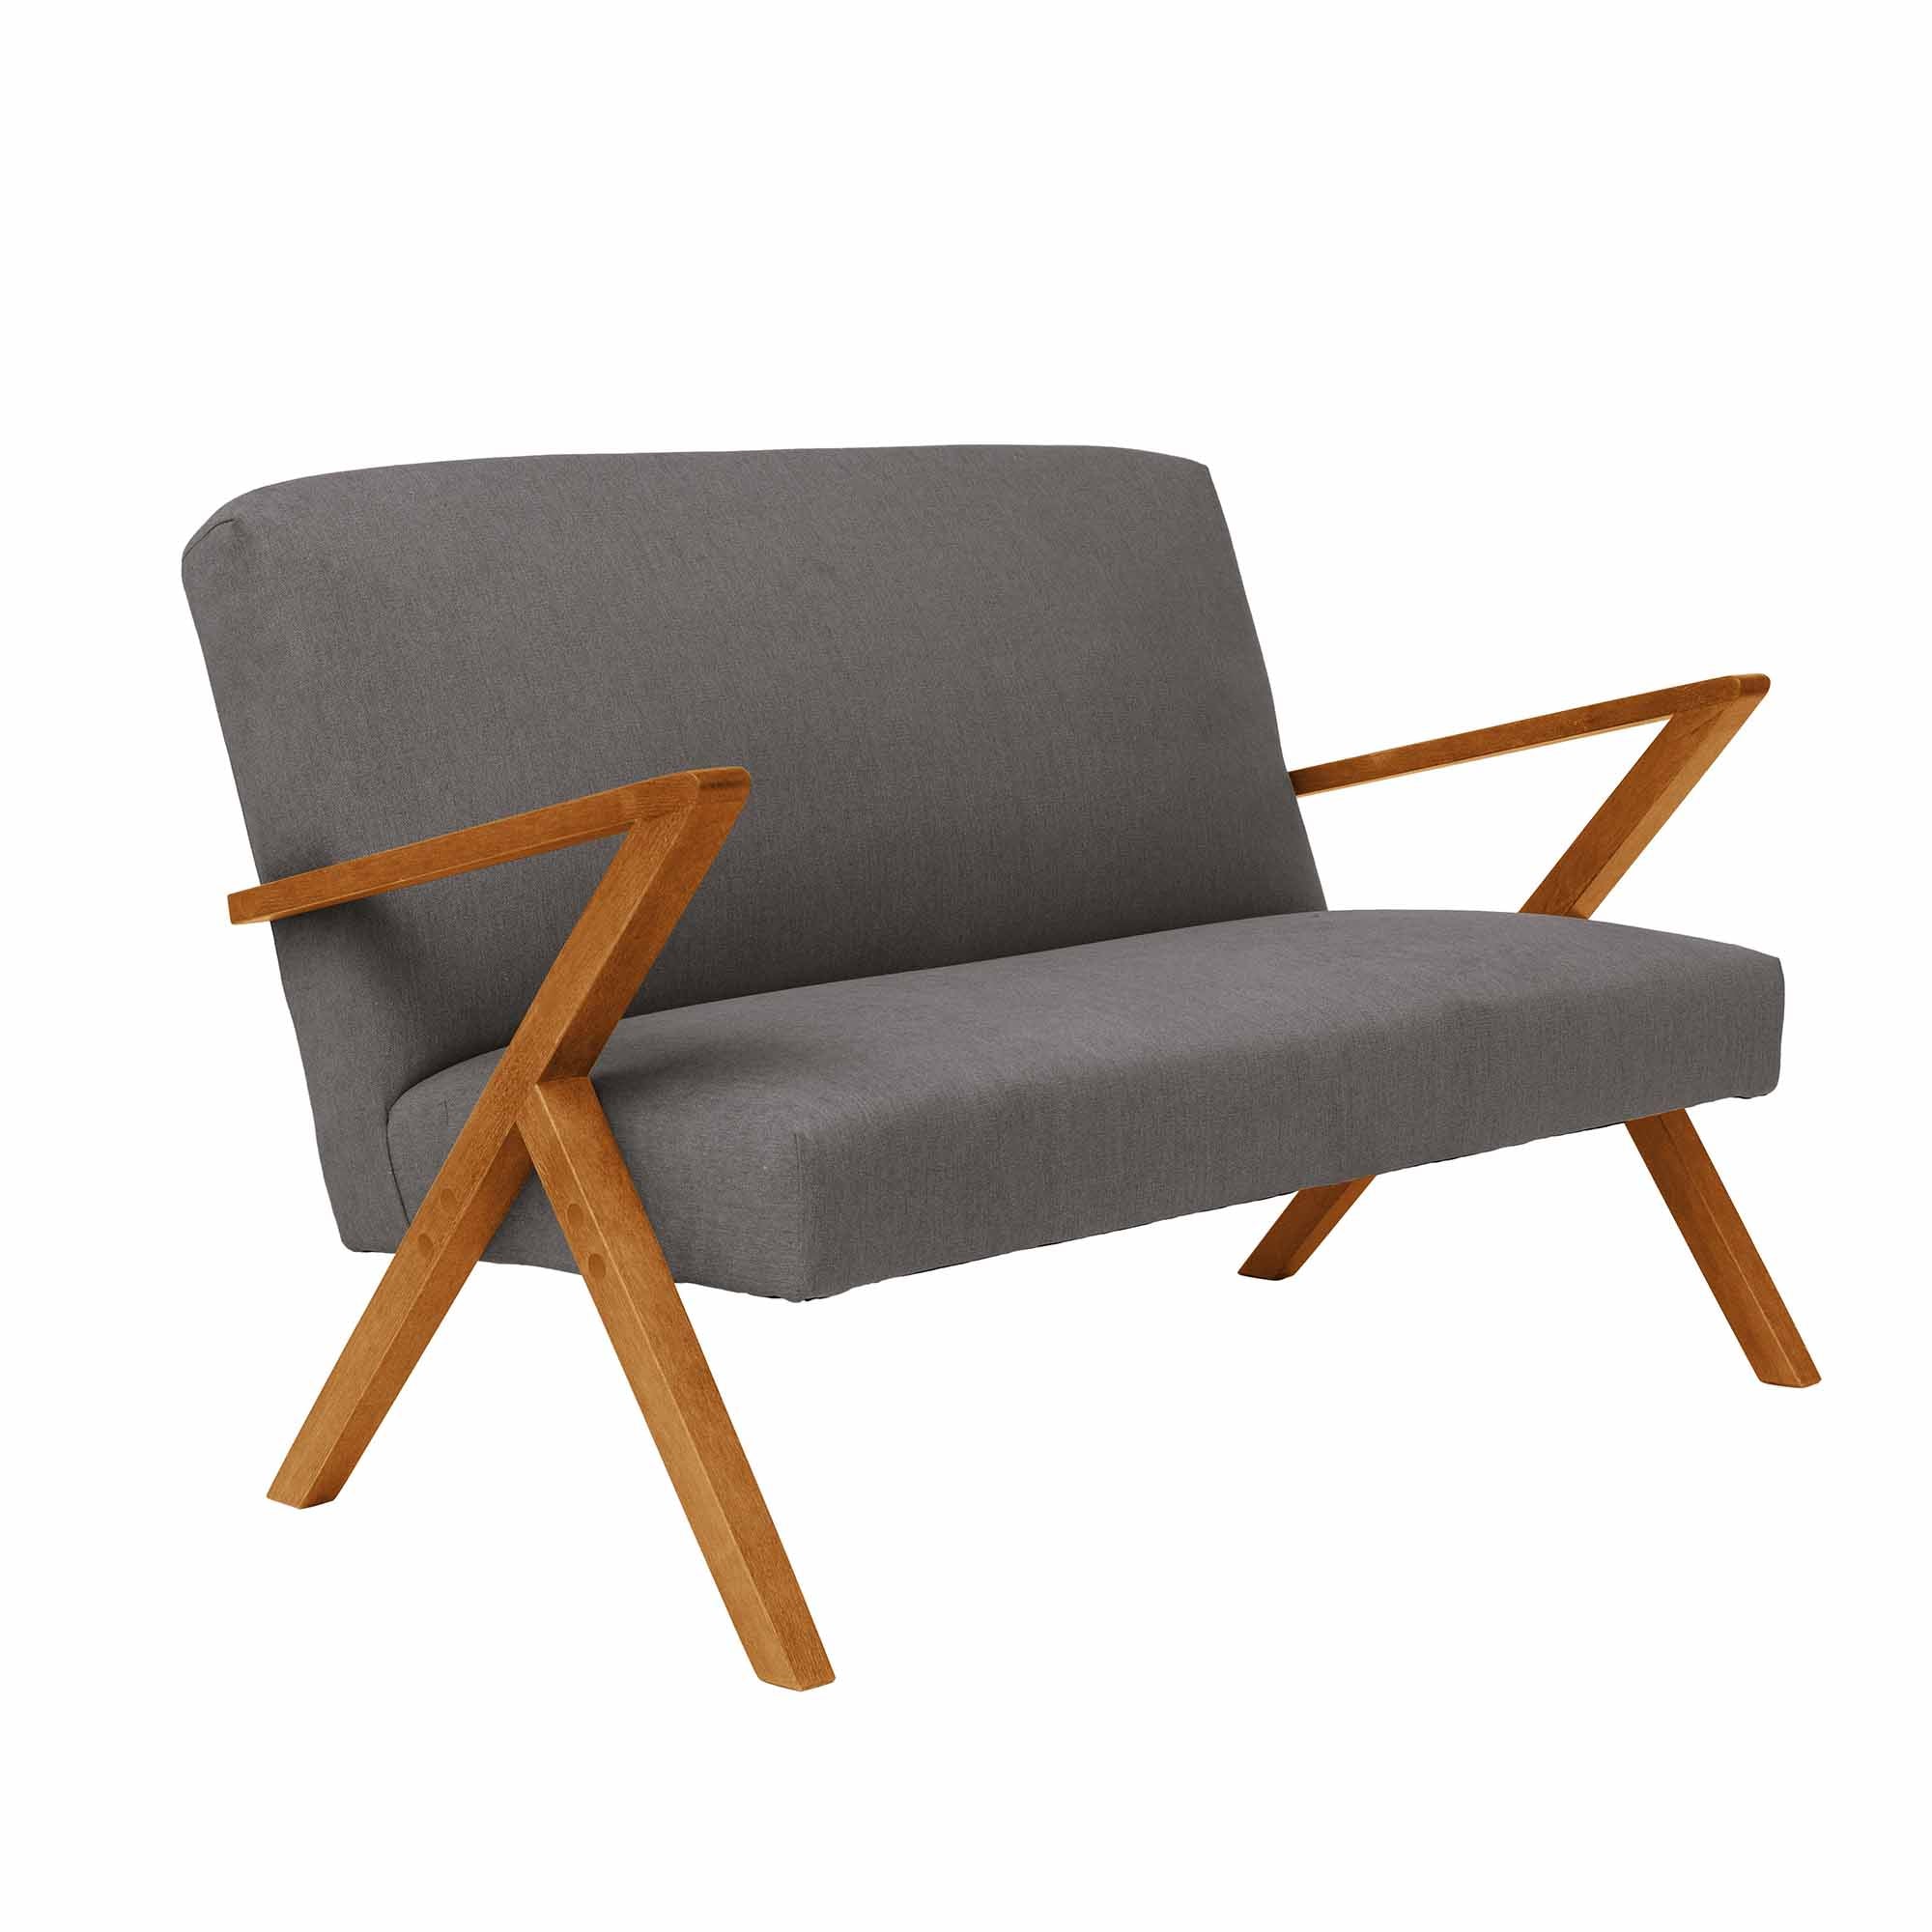 2-Seater Sofa, Beech Wood Frame, Oak Colourб grey gabric, half-side view